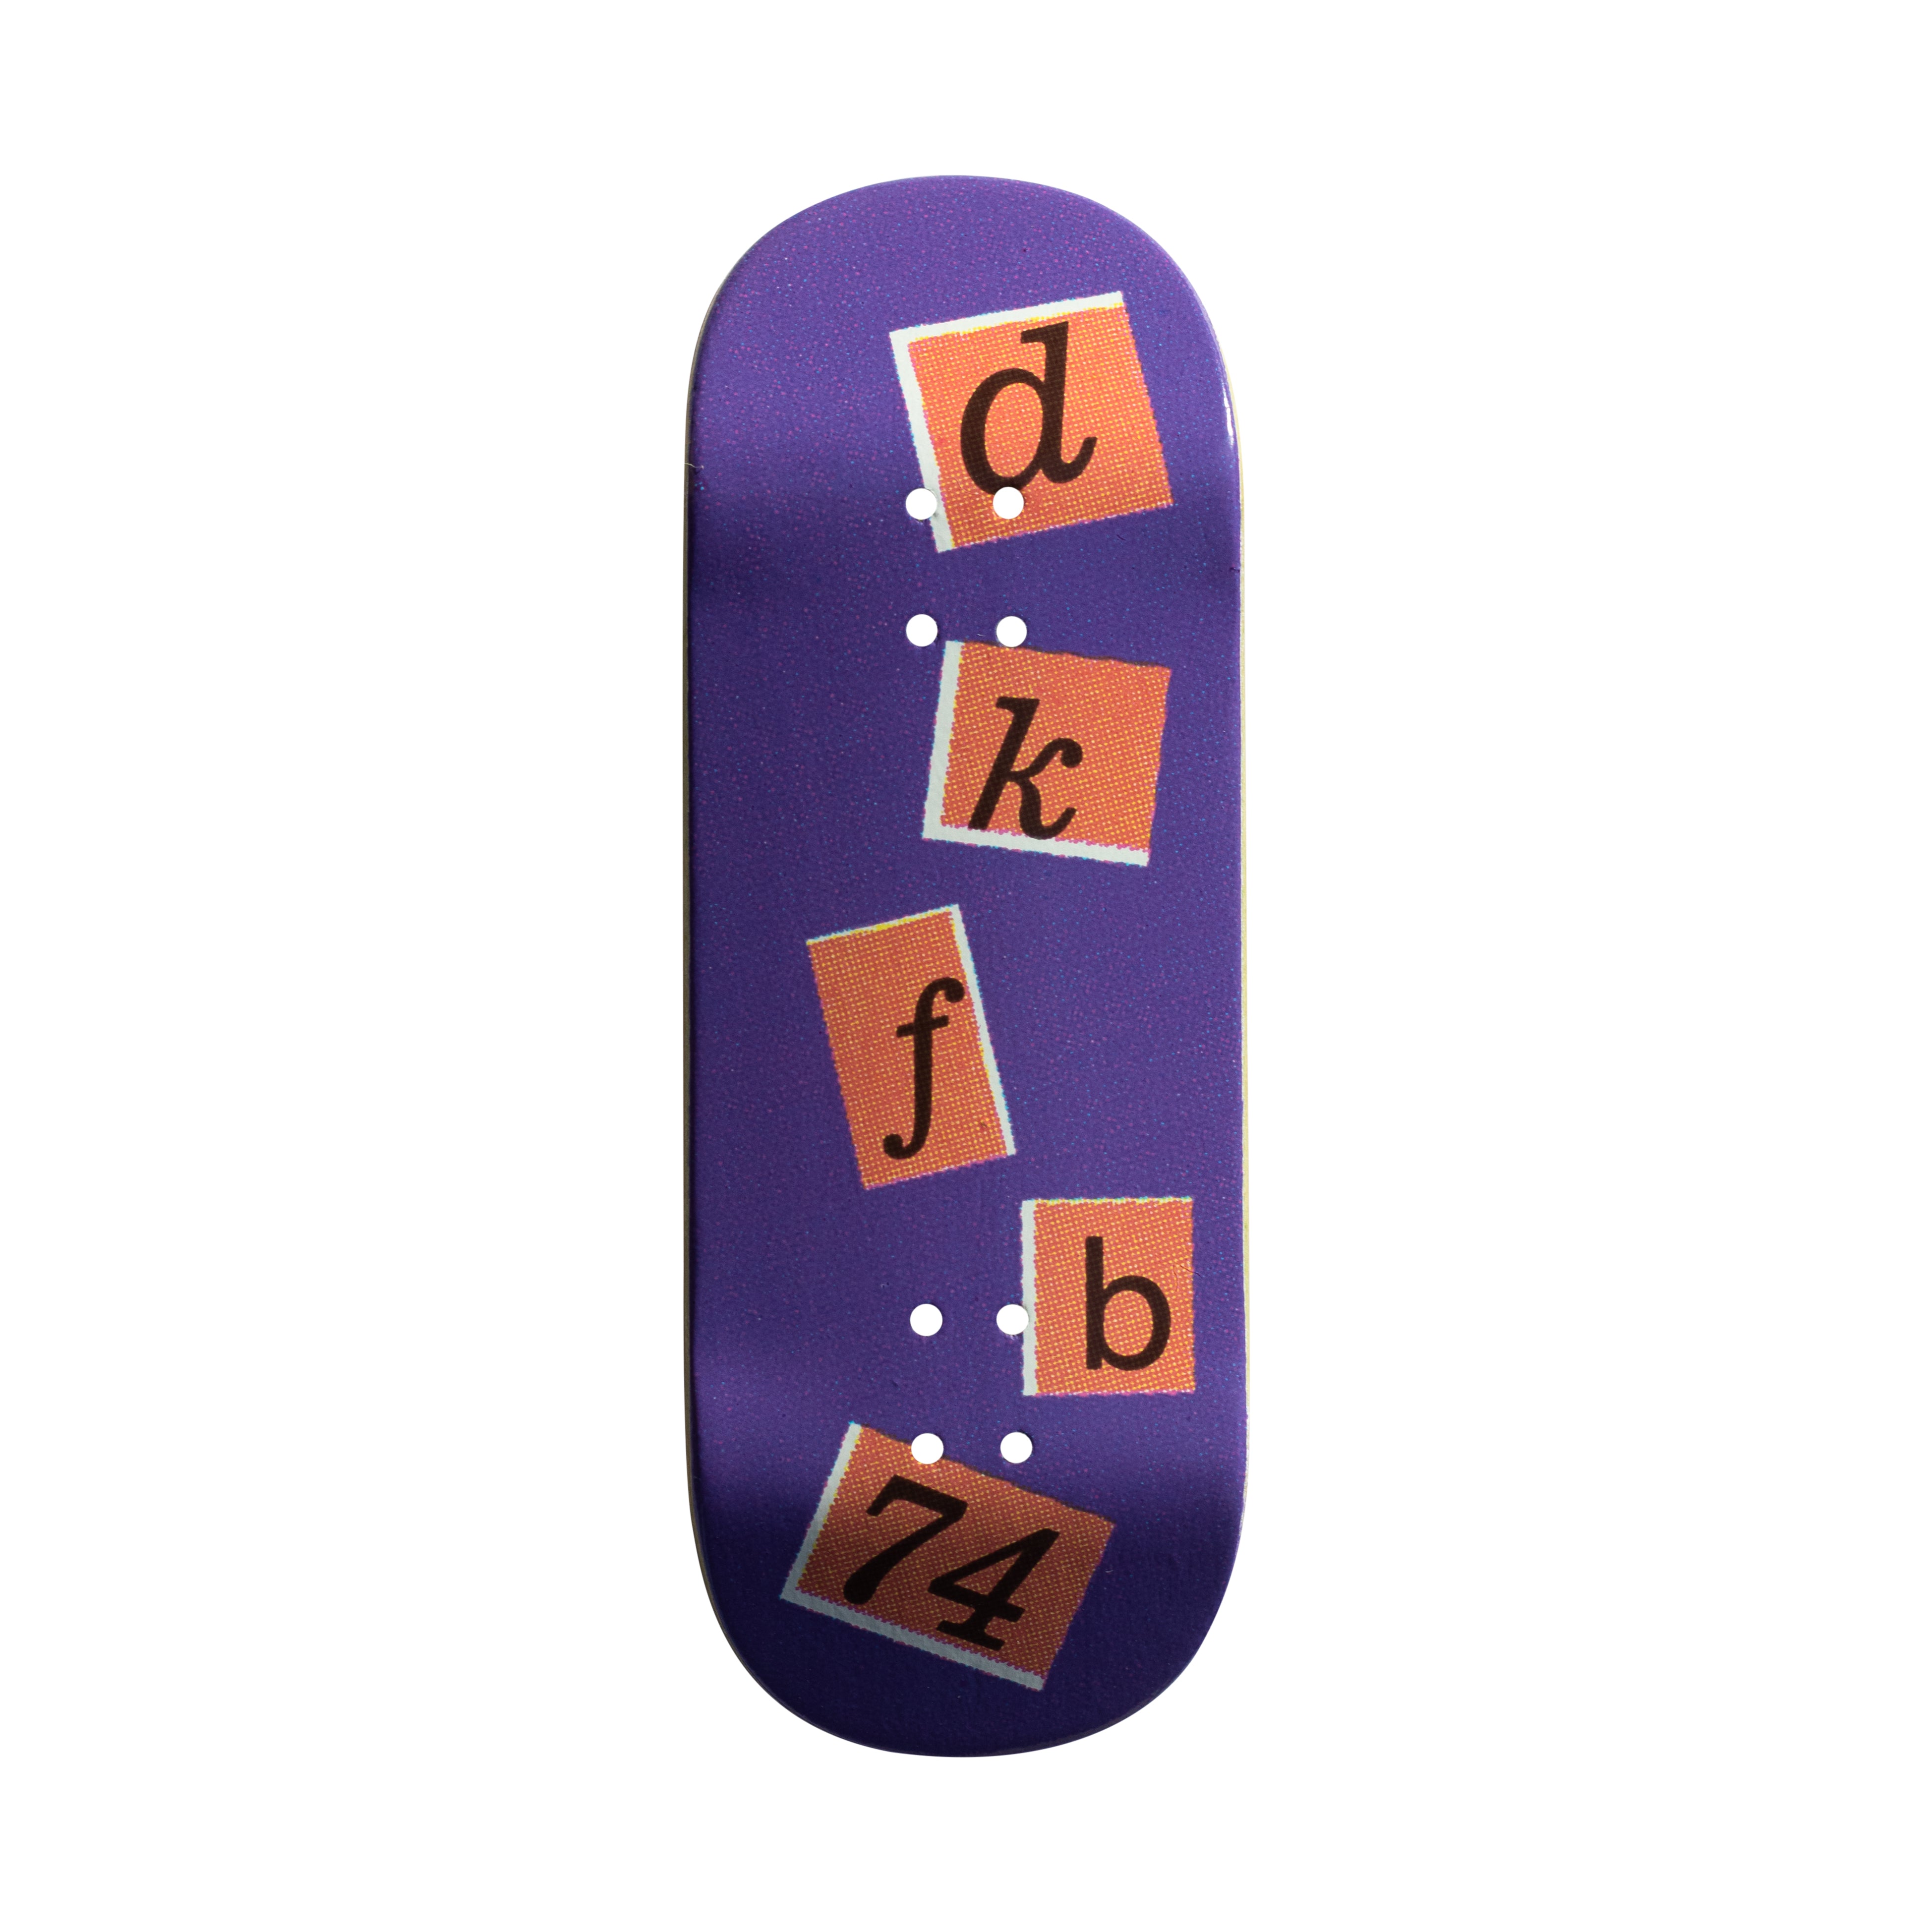 DK FB - 'Letters' Purple